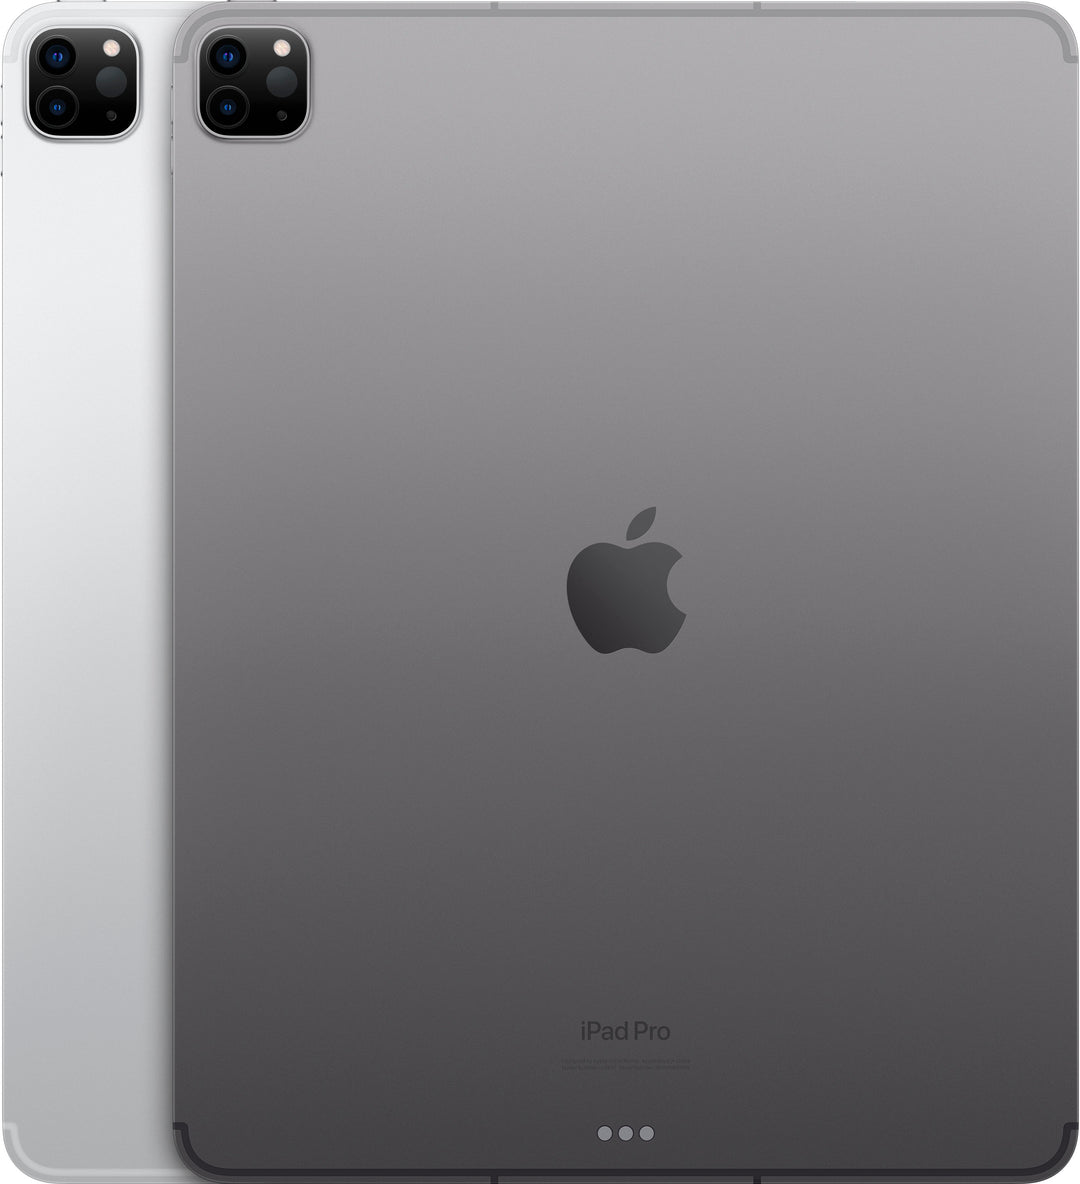 Apple - 12.9-Inch iPad Pro (Latest Model) with Wi-Fi + Cellular - 2TB - Space Gray (Verizon)_4